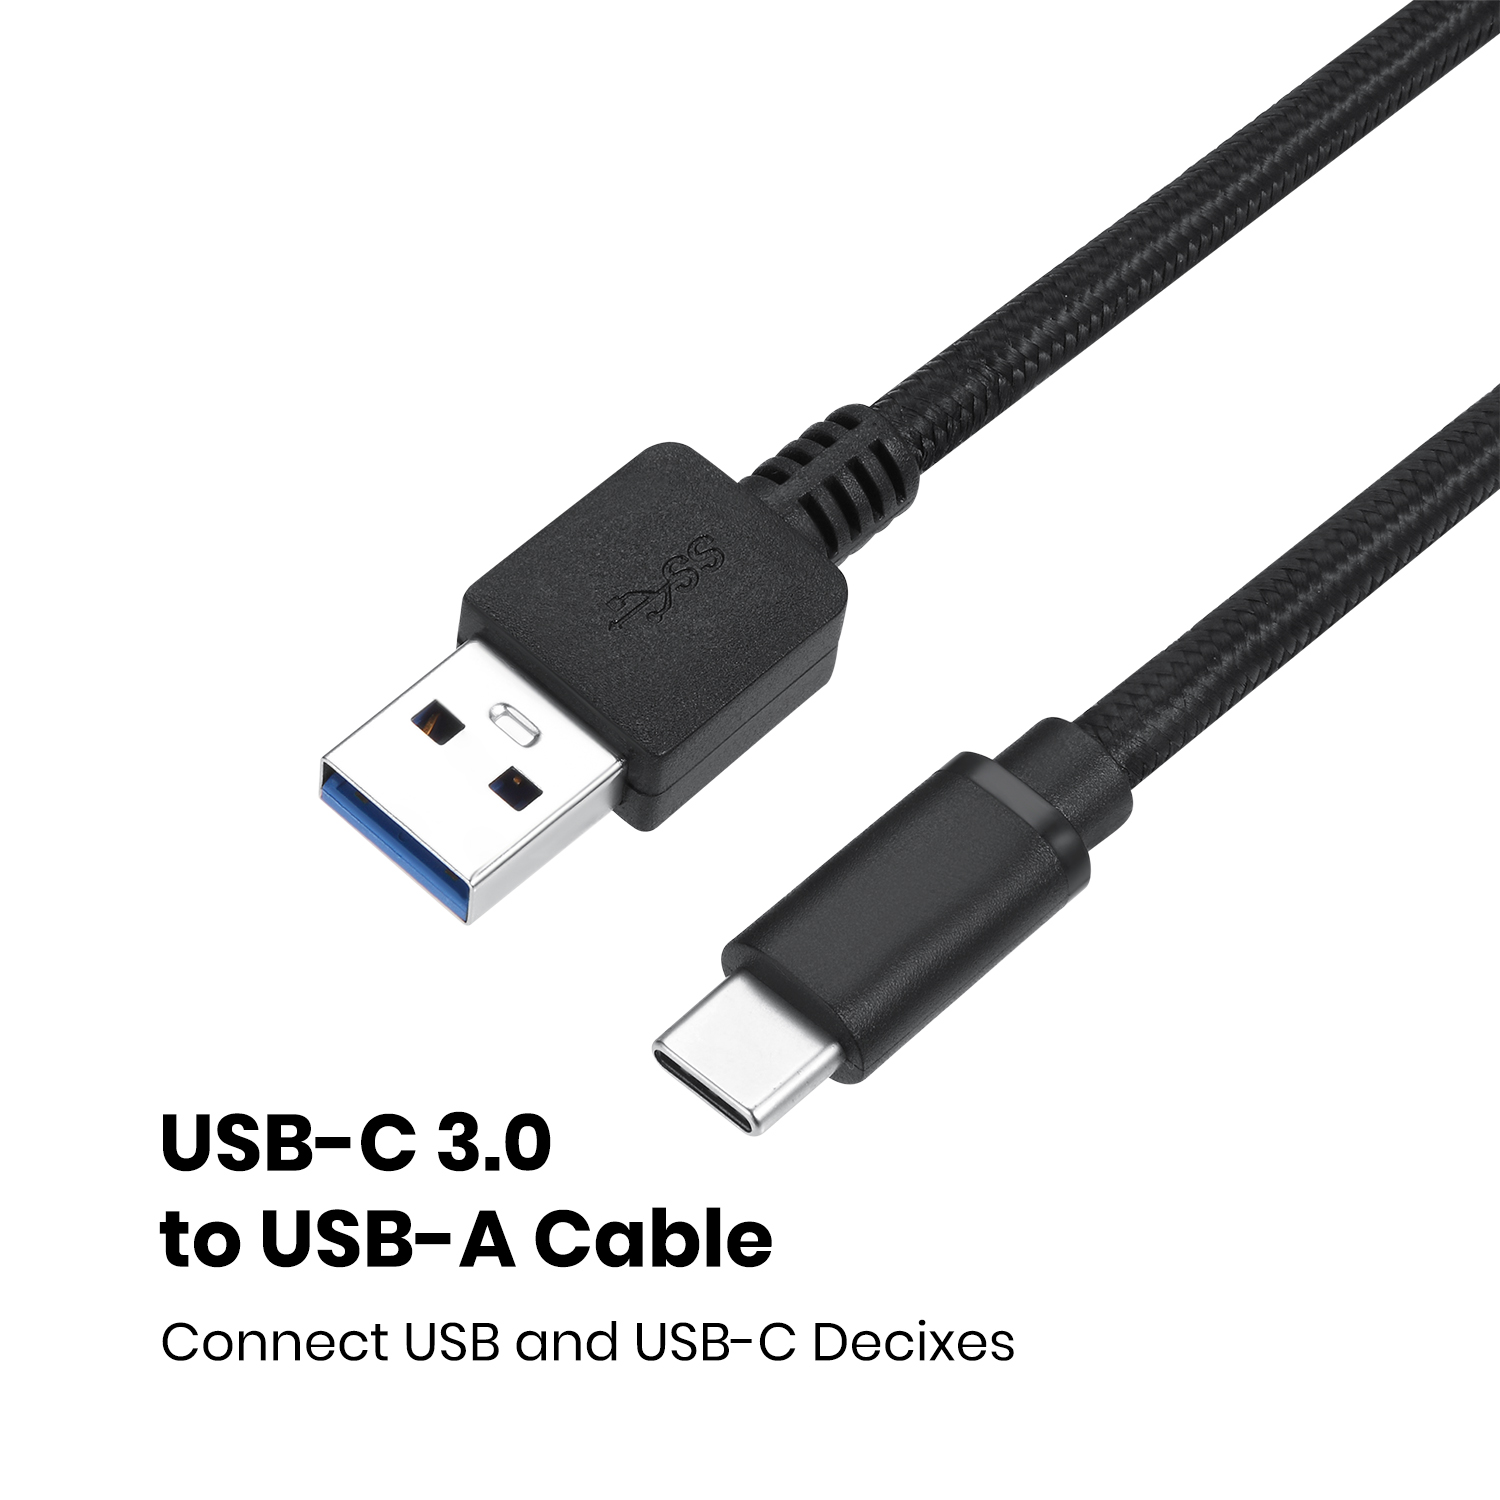 PERIXX PERIPRO-407 USB-C mit Anschluss, Schwarz USB-Kabel